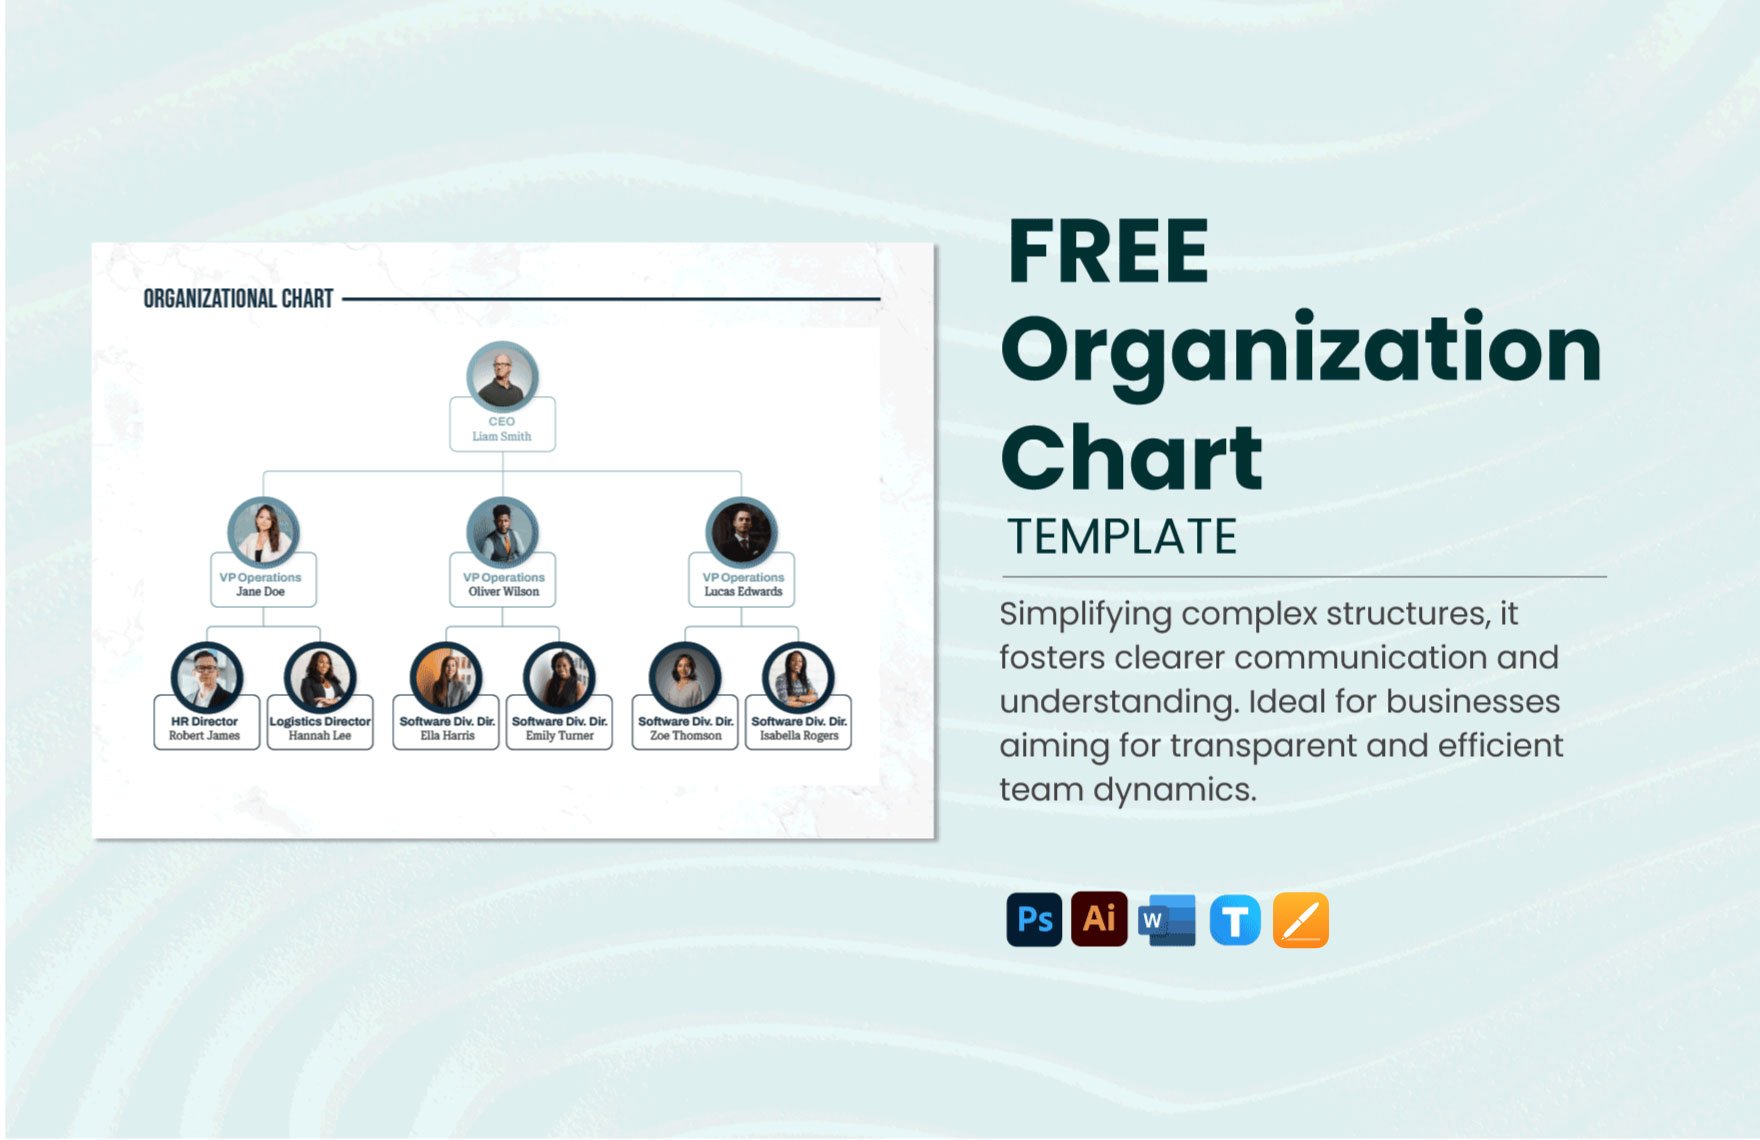 Organization Chart Template